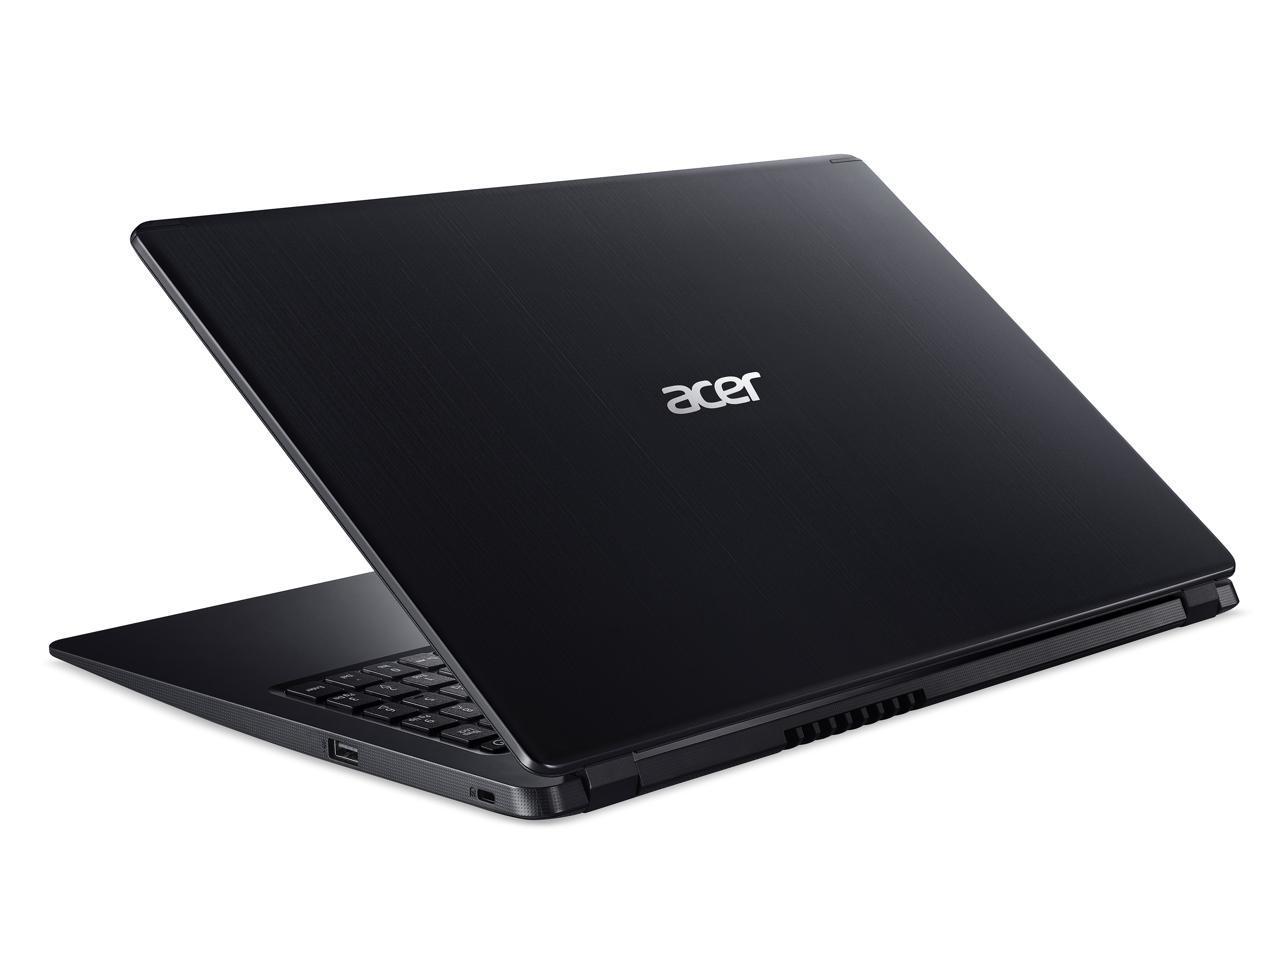 Acer Aspire 5 15.6" Laptop AMD Ryzen 5 3500U 2.1GHz 8GB Ram 256GB SSD Win10H